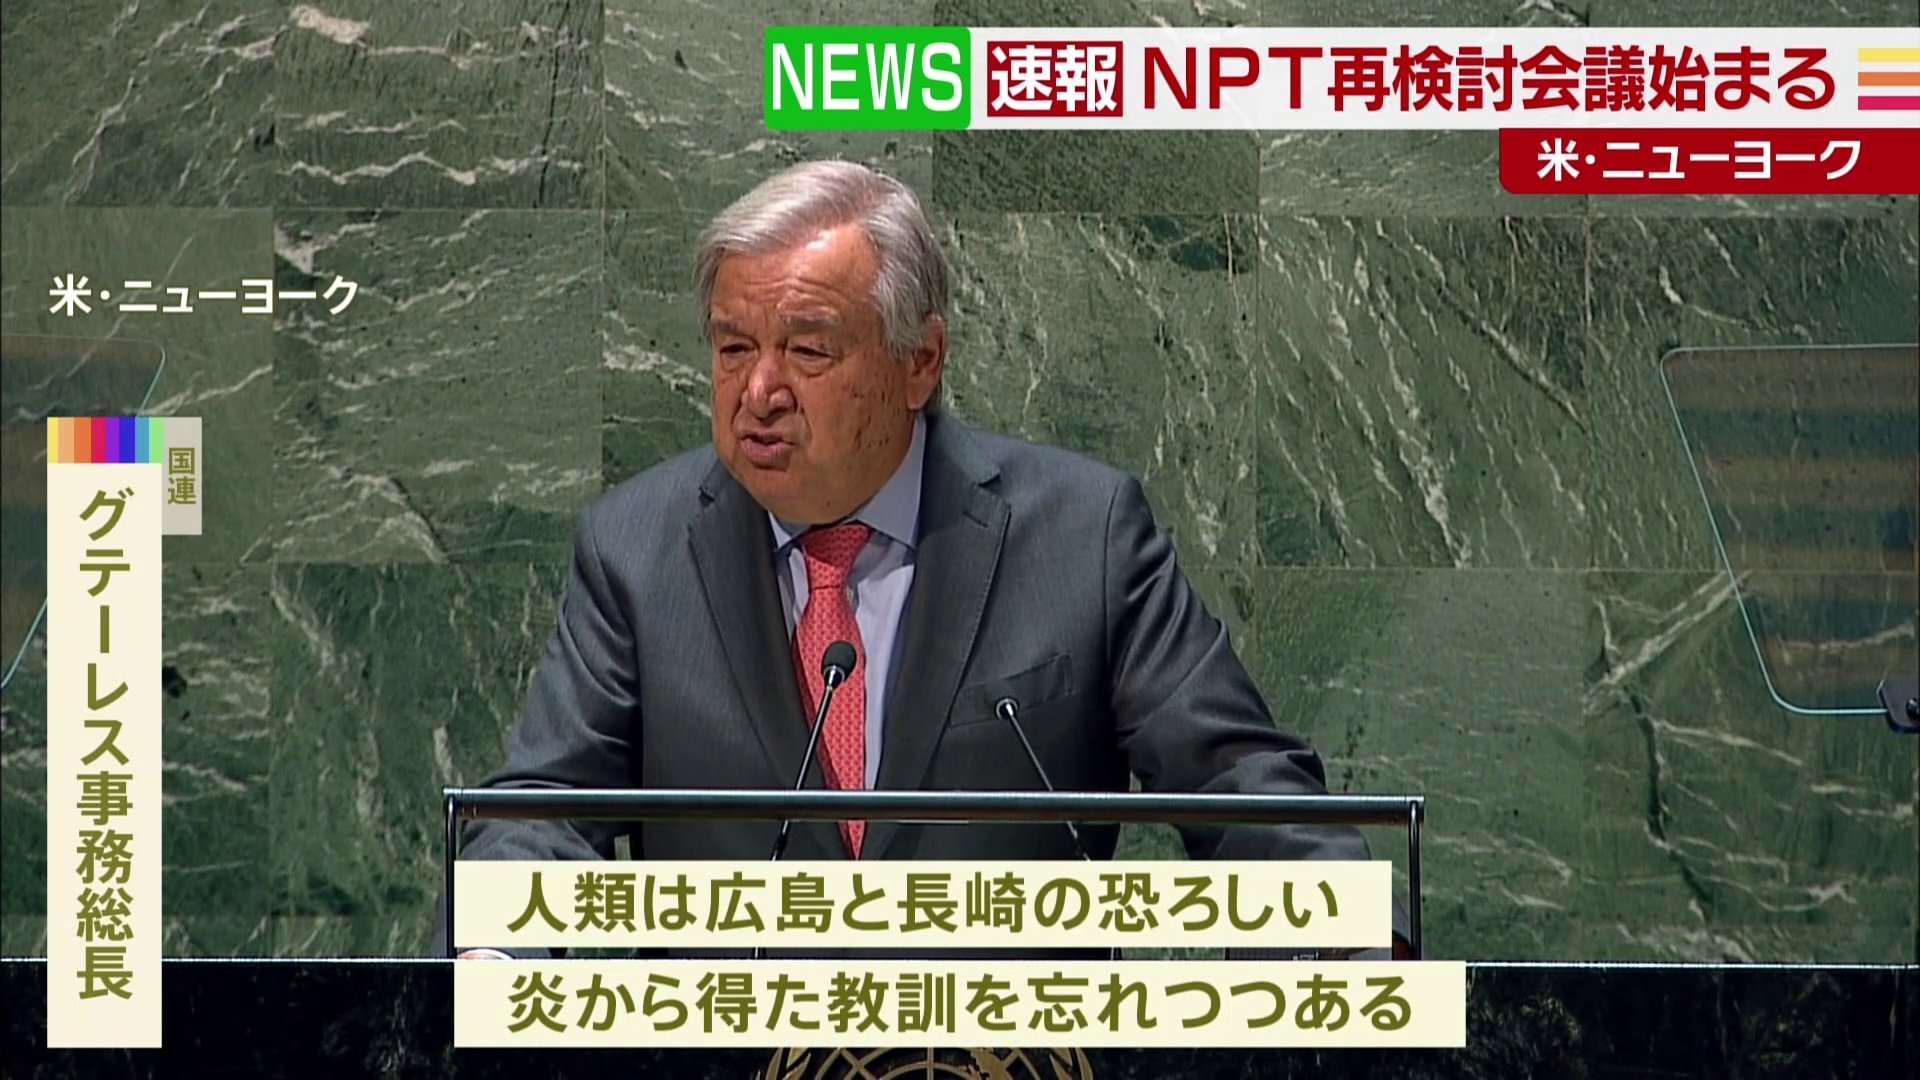 NPT再検討会議始まる 国連・事務総長「広島と長崎の教訓を忘れつつある」